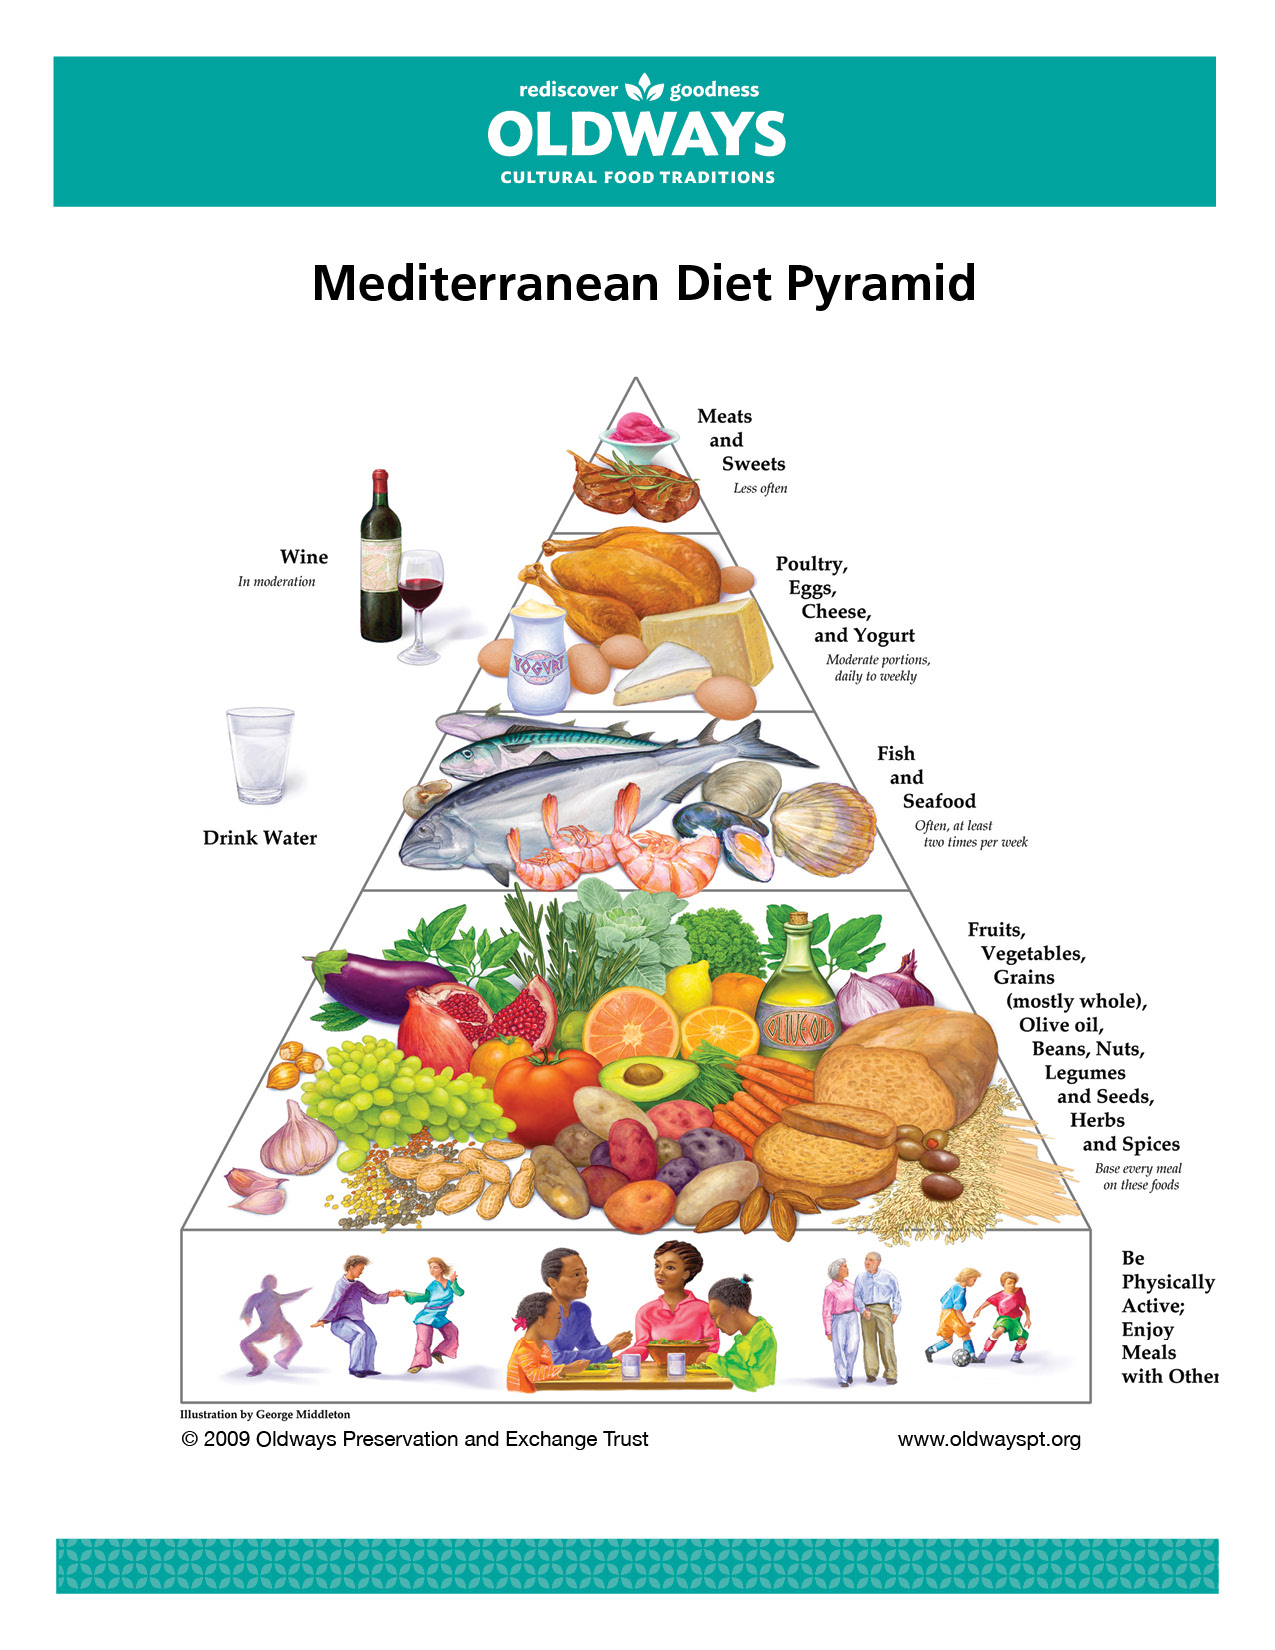 Traditional Herbs of the Mediterranean Diet | Healing Herbs of Crete